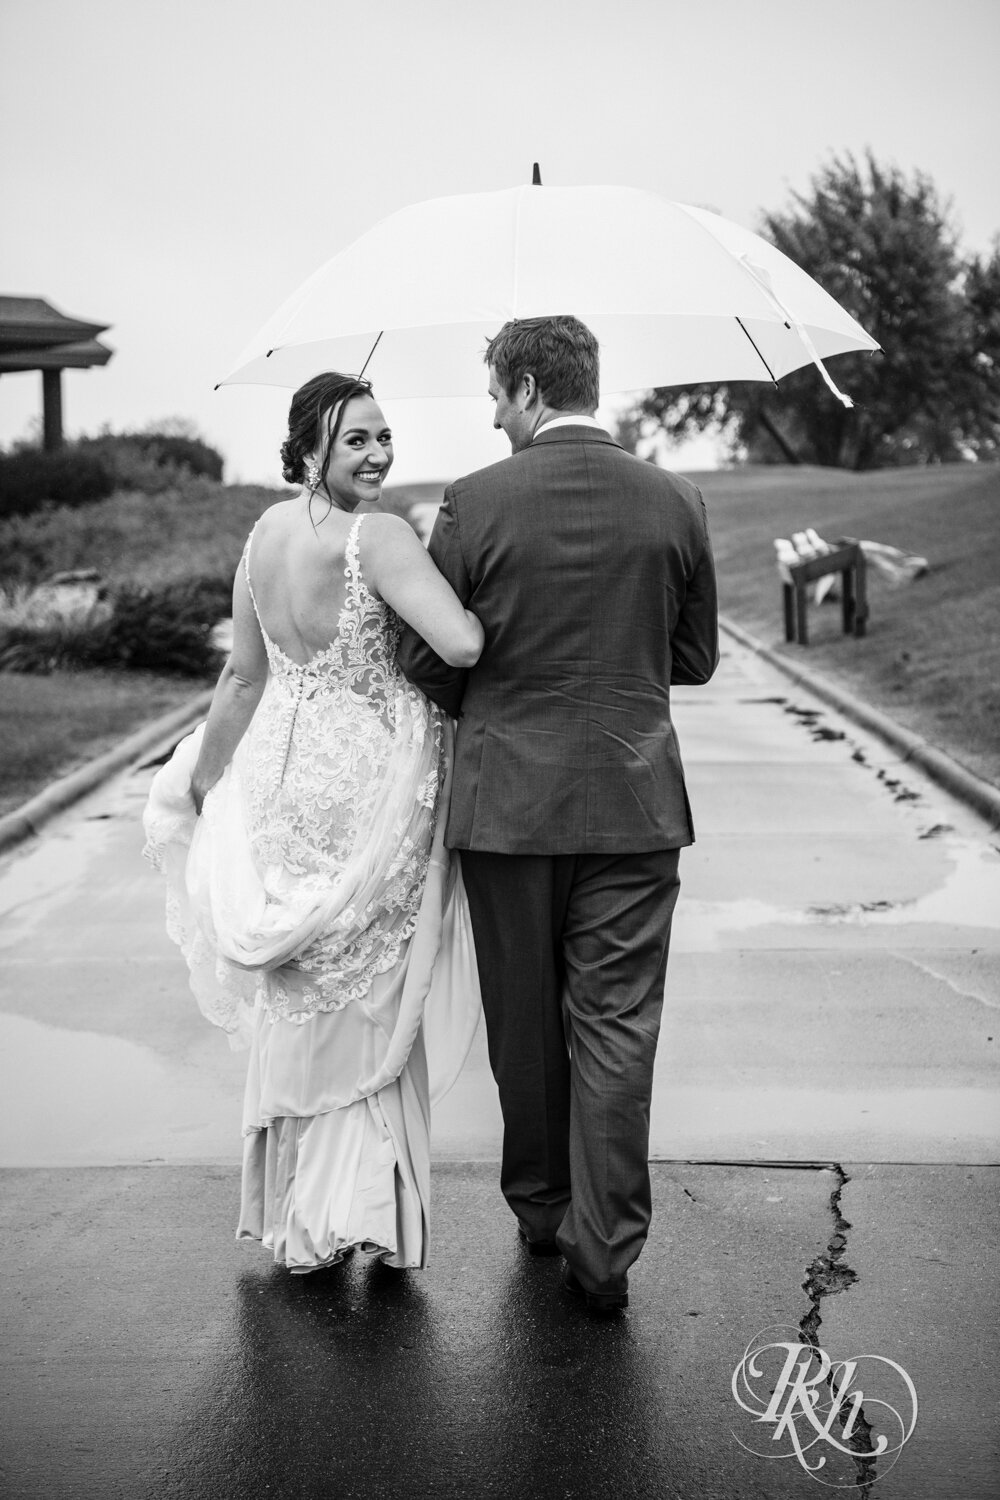 Bride and groom walking under umbrella on rainy day